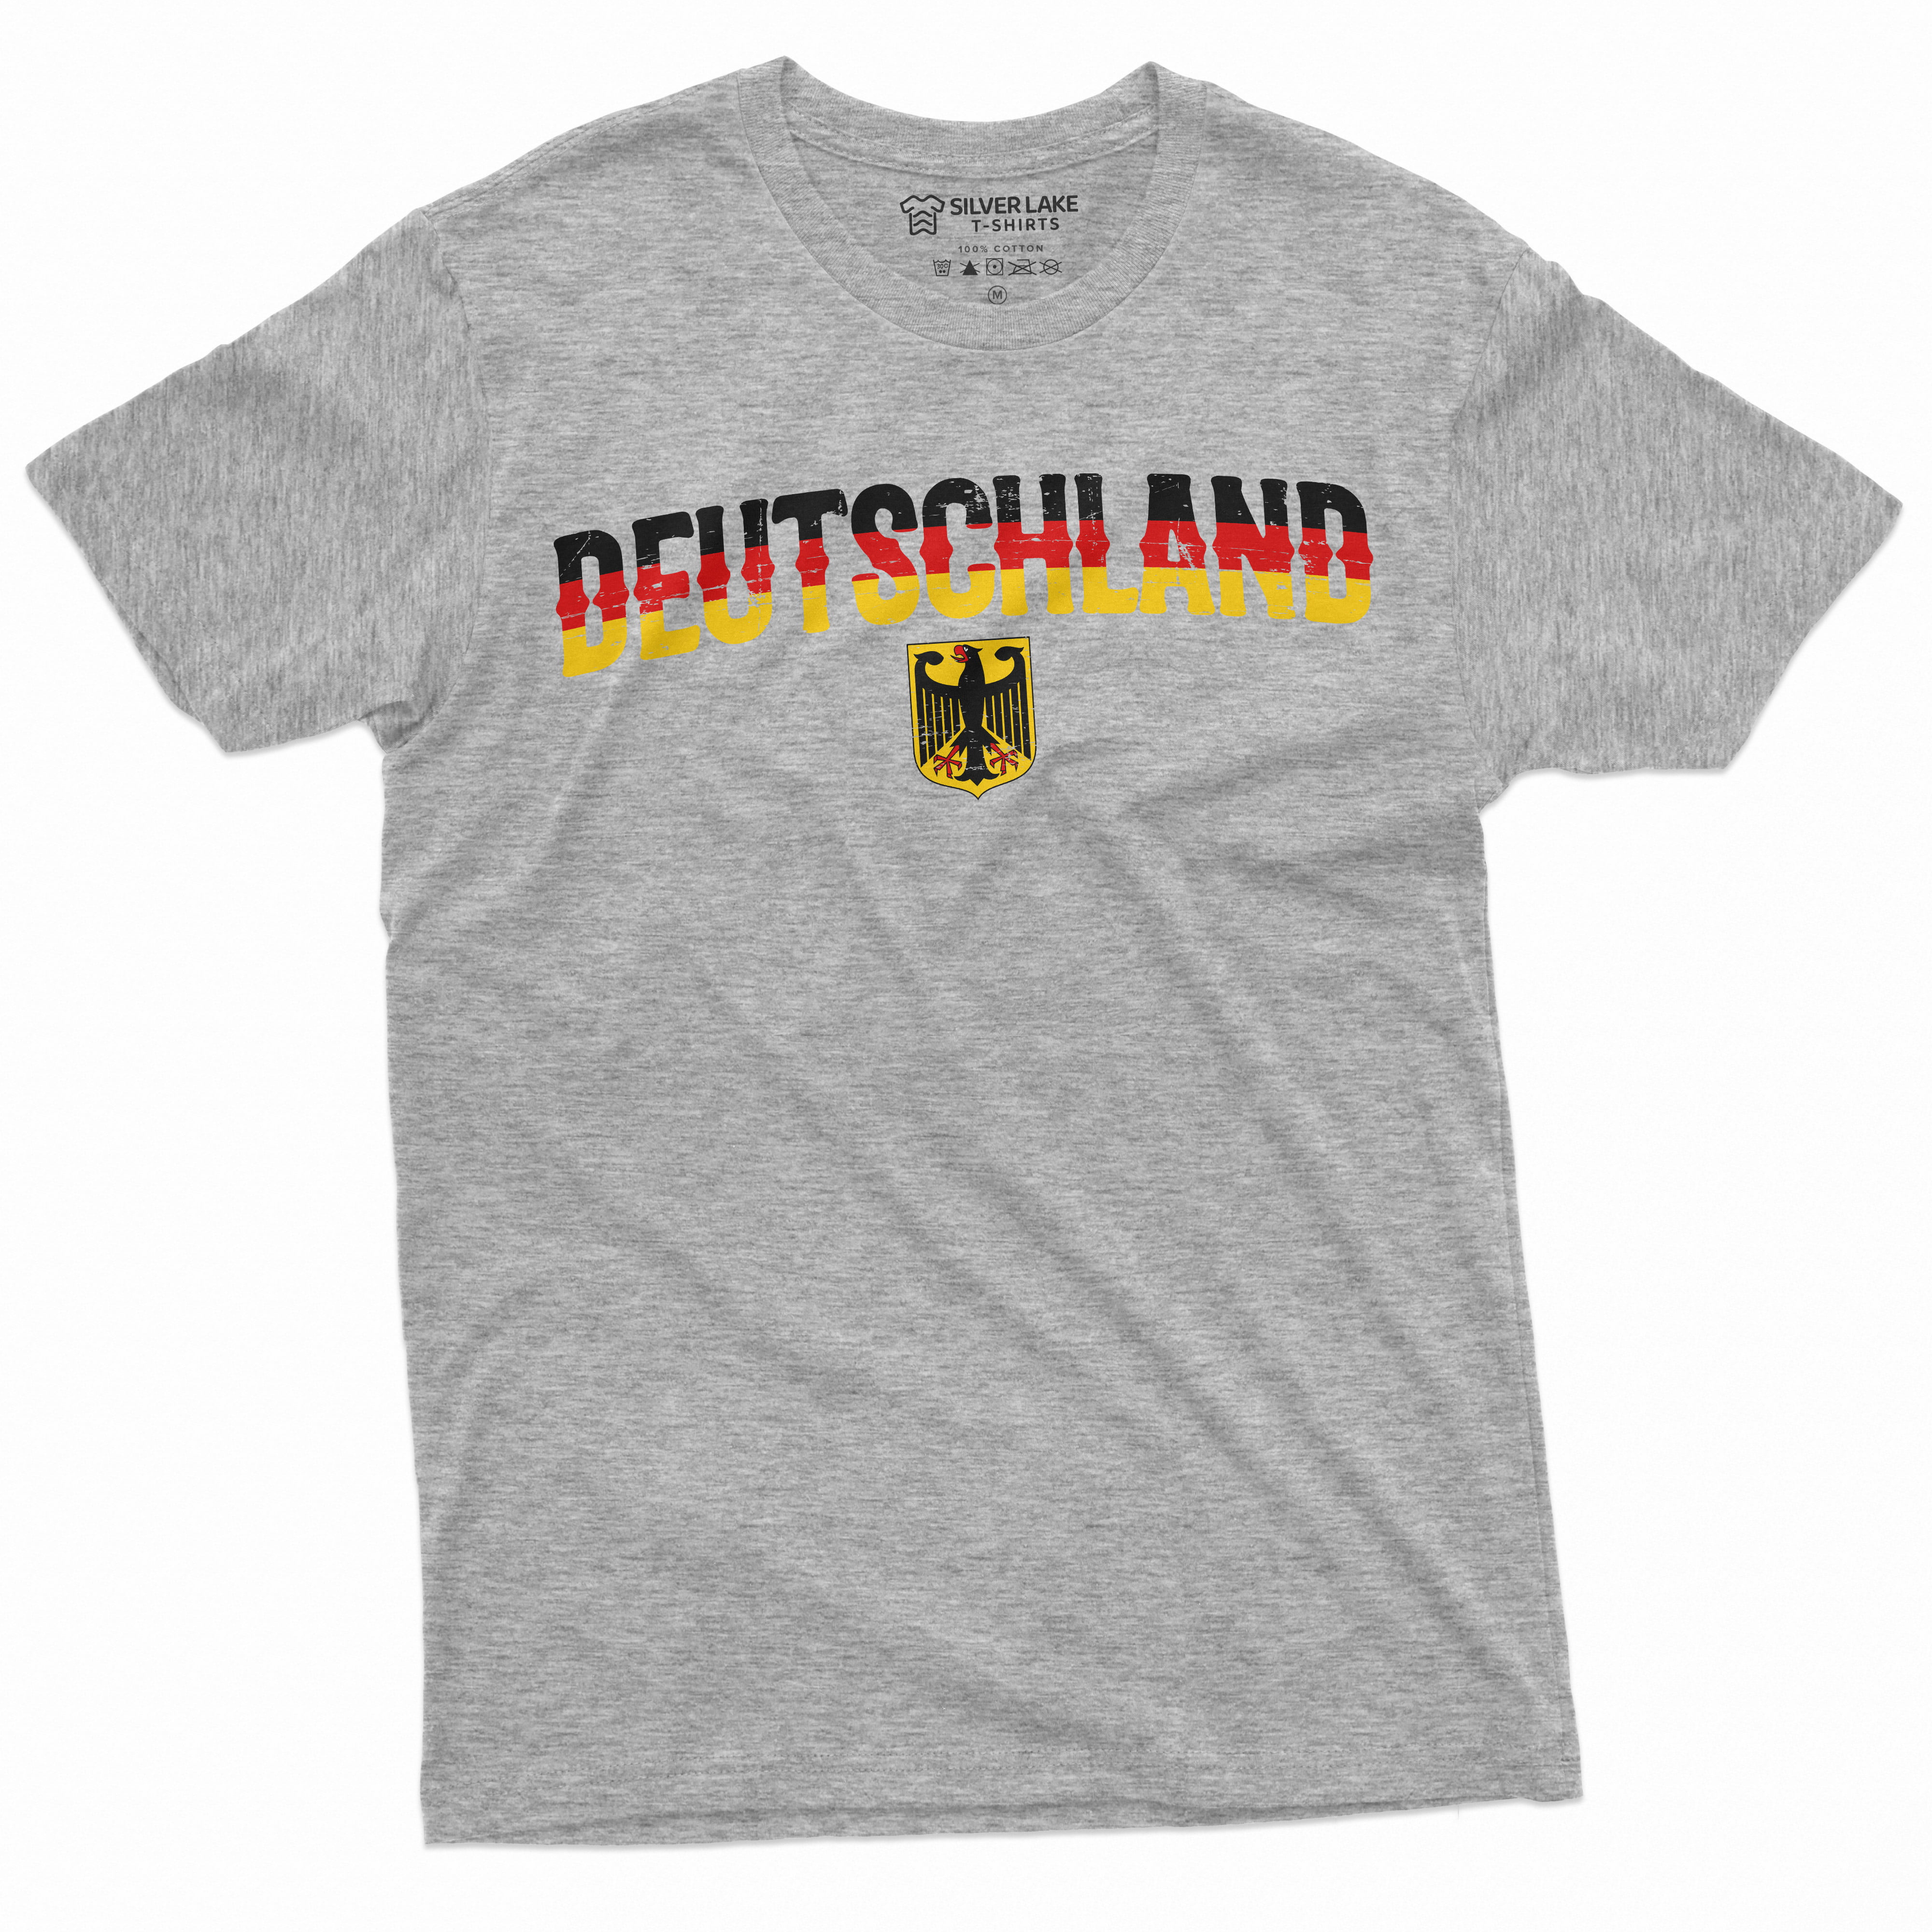 Men\'S Germany T-Shirt Deutschland Patriotic Tshirt German Flag Tee Shirt  (X-Large Grey)